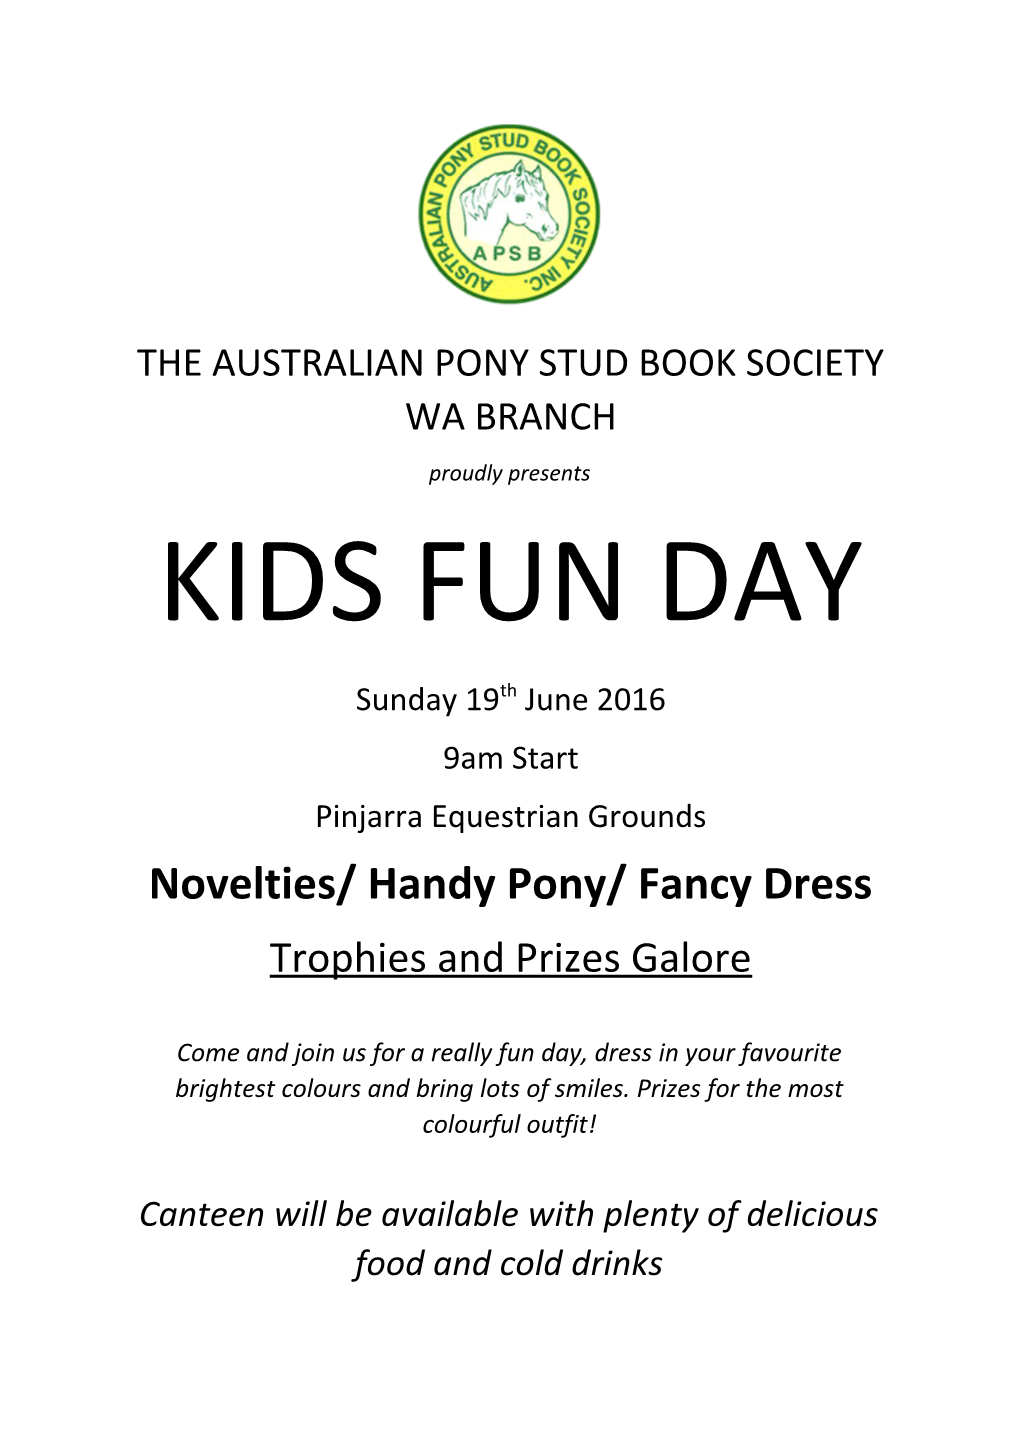 The Australian Pony Stud Book Society Wa Branch